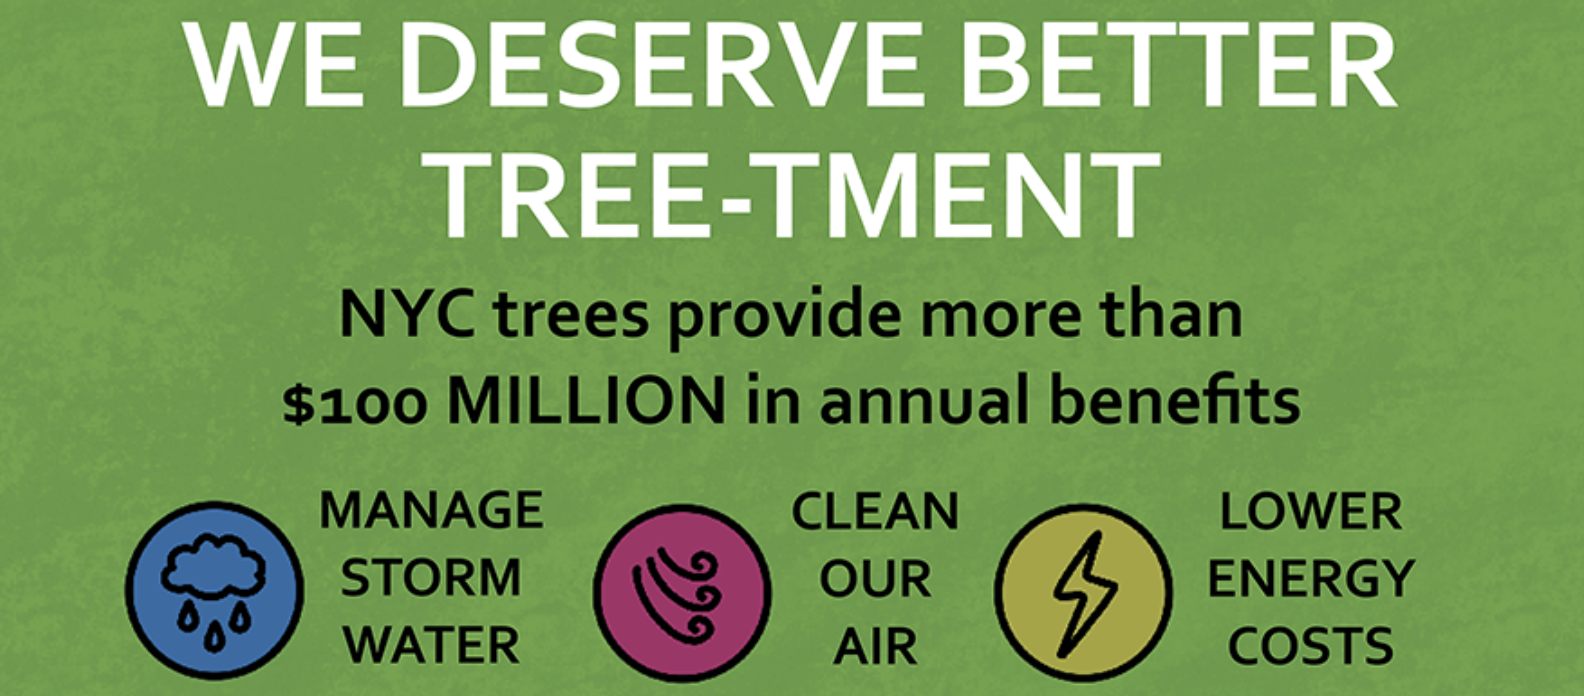 We deserve better tree-tment: Why street trees matter